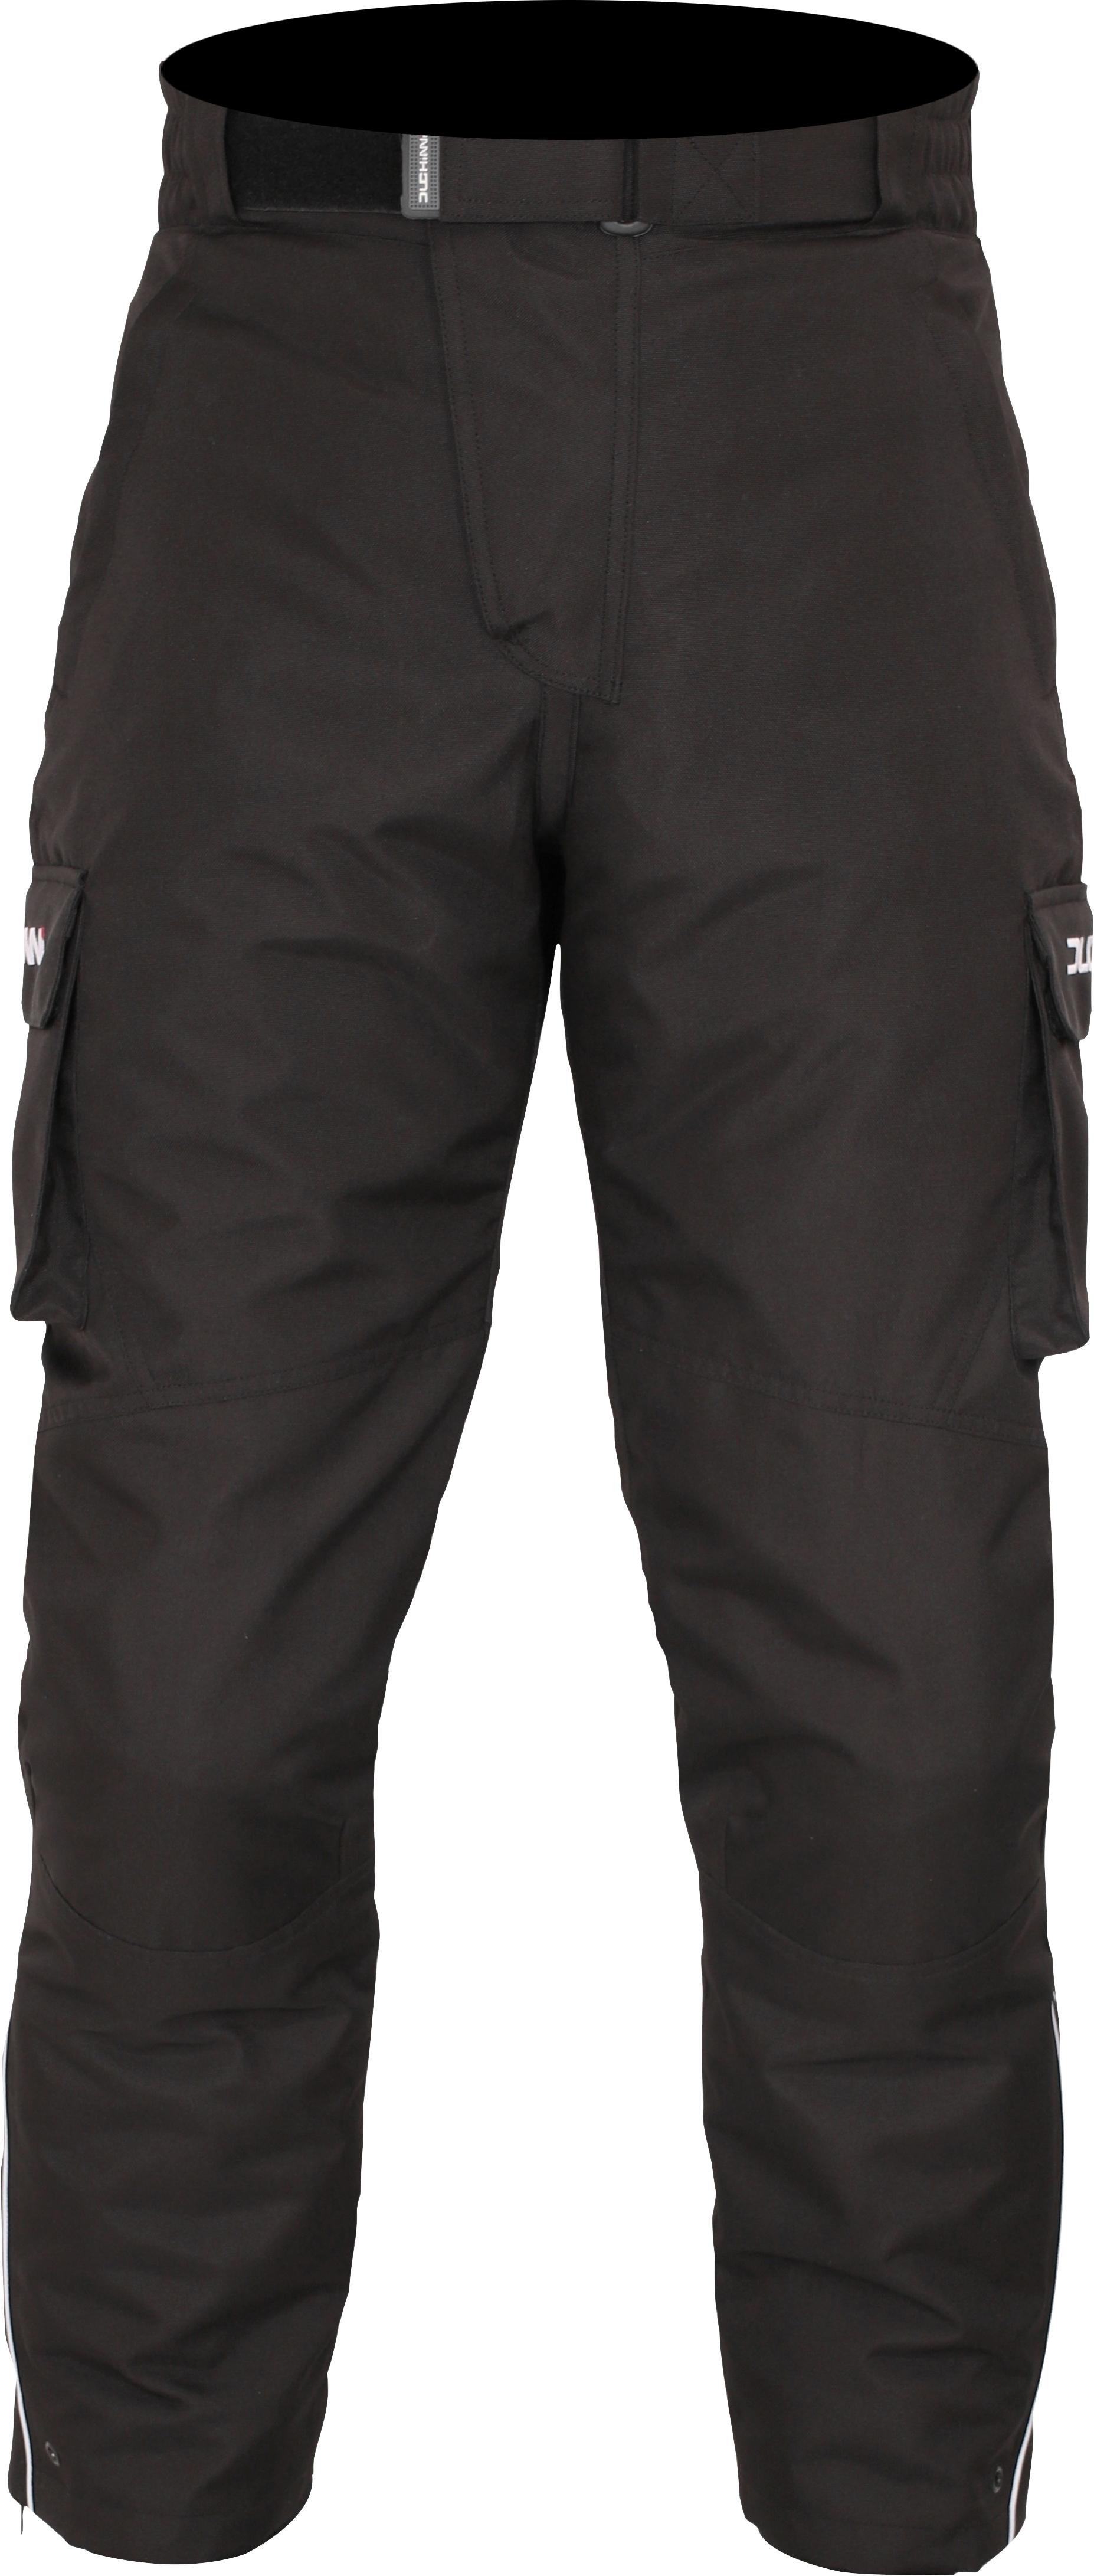 Duchinni Pacific Motorcycle Short Jeans - Black, 3Xl